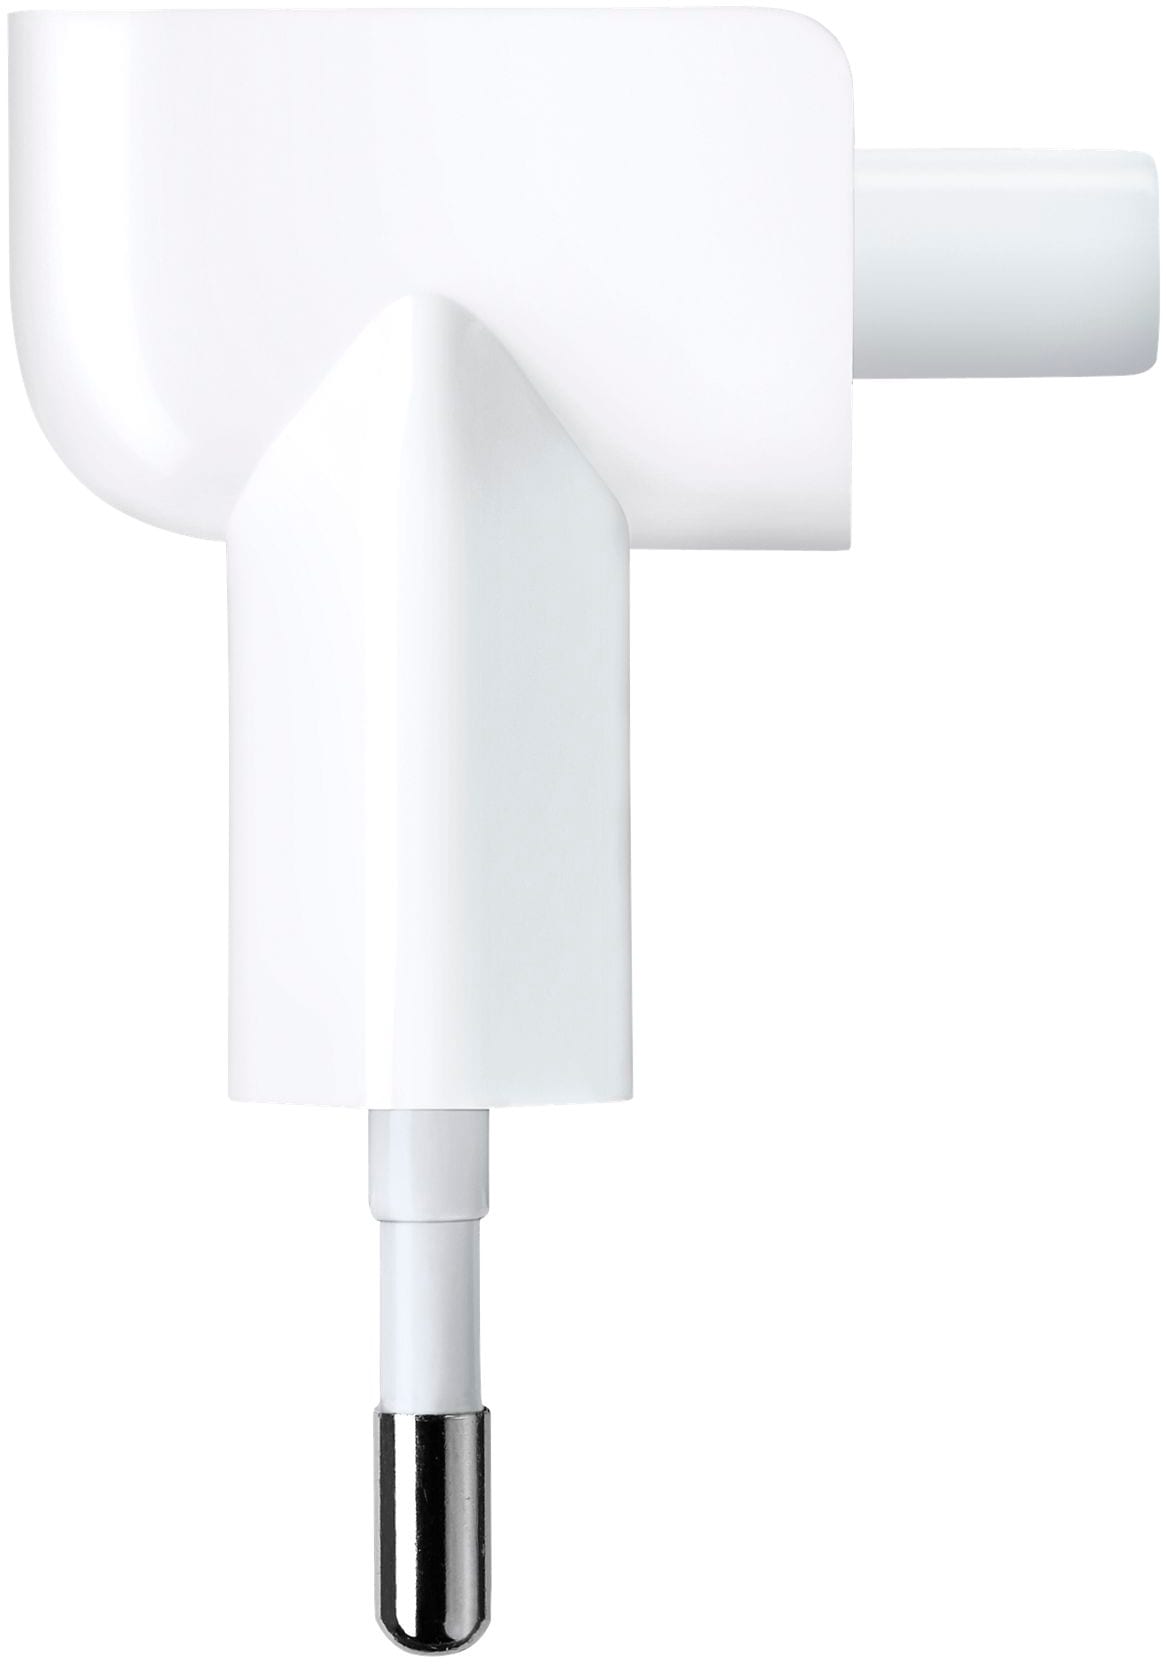 Apple Adapter »World Travel Adapter Kit«